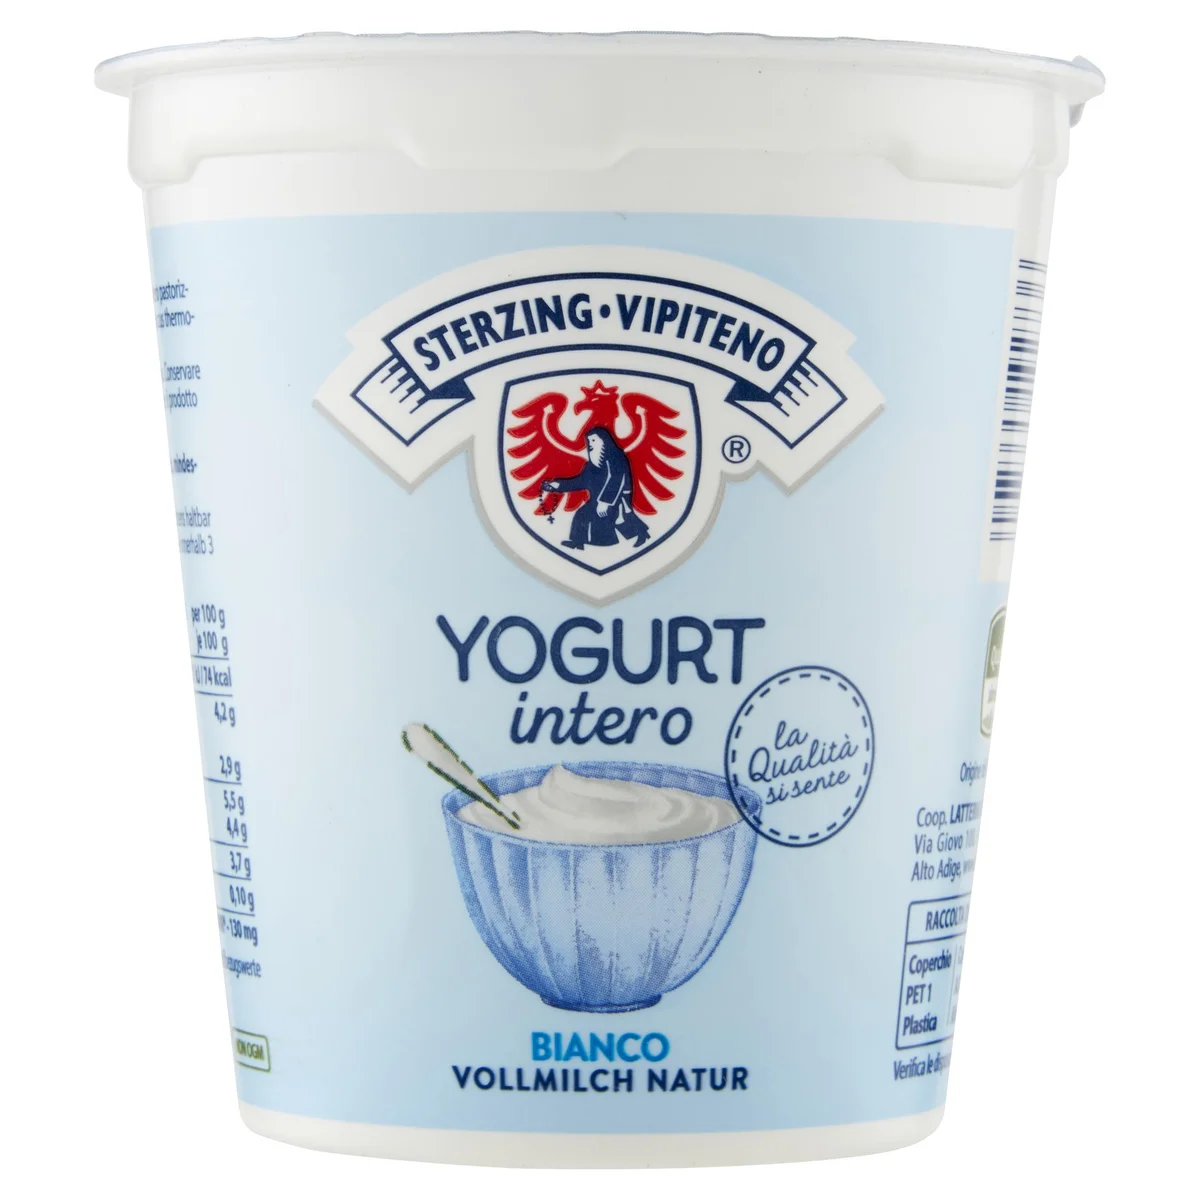 Sterzing Vipiteno Yogurt Vipiteno Intero Bianco 400 g